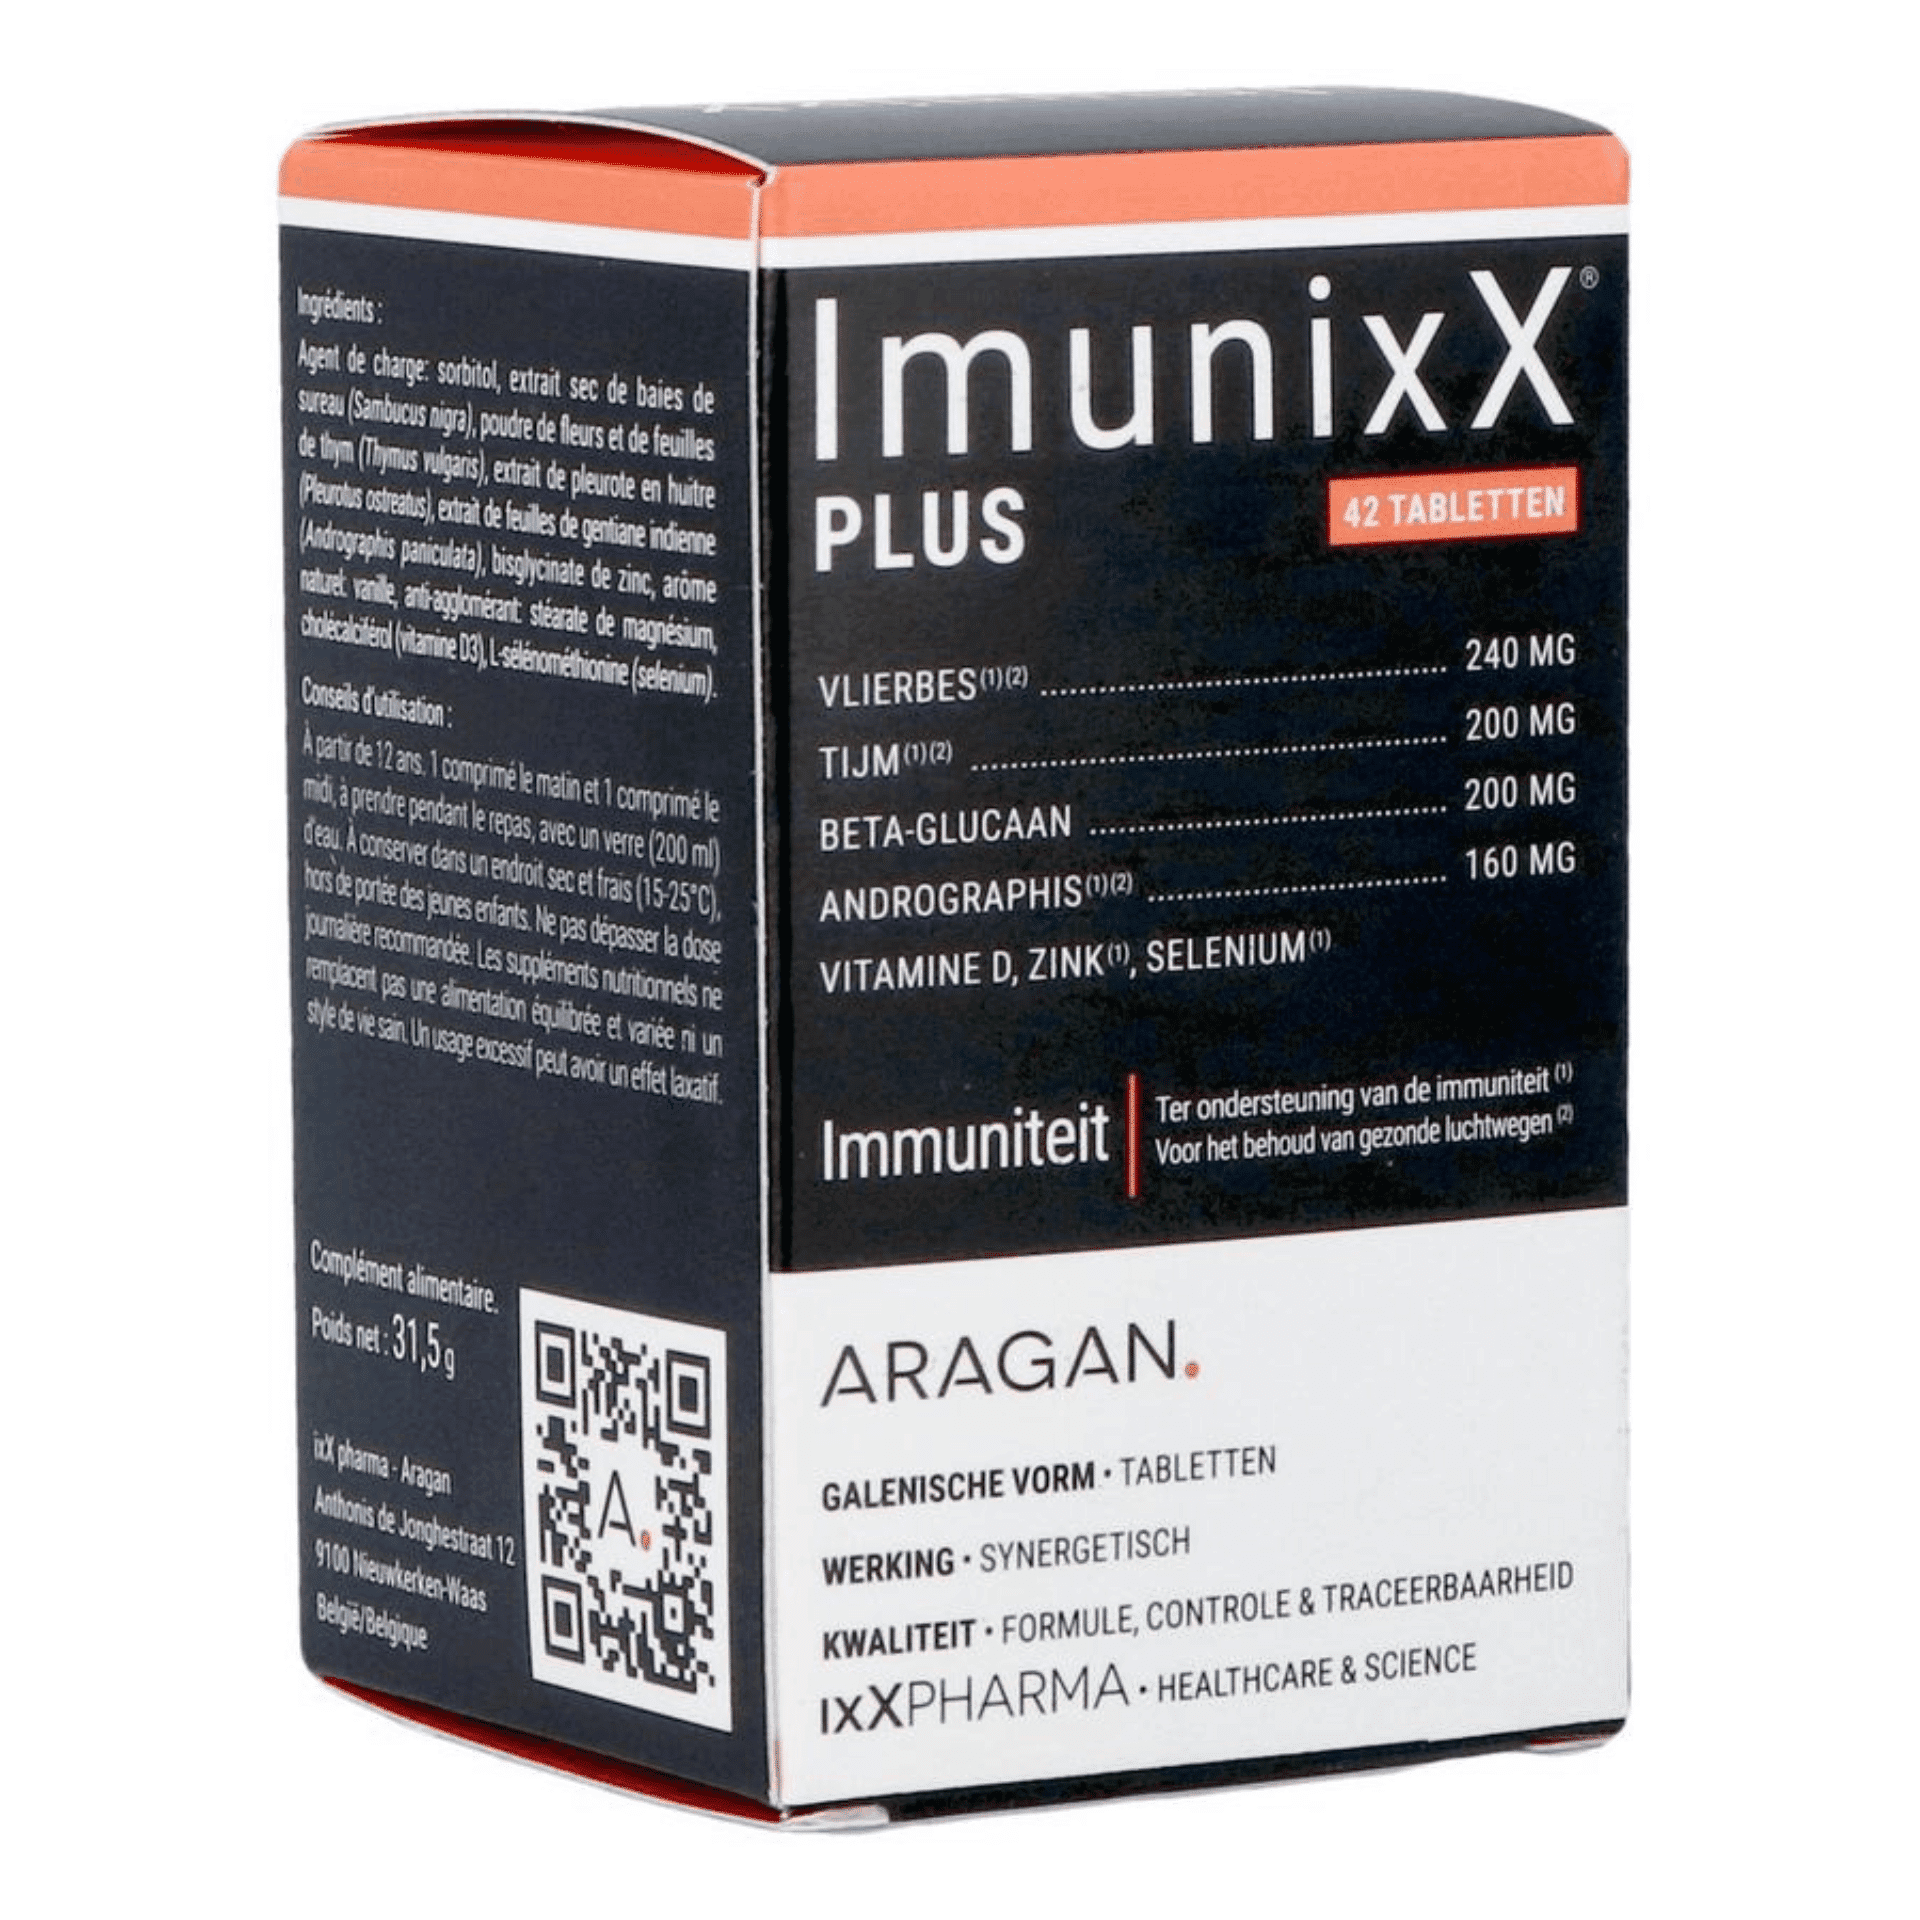 ImunixX Plus